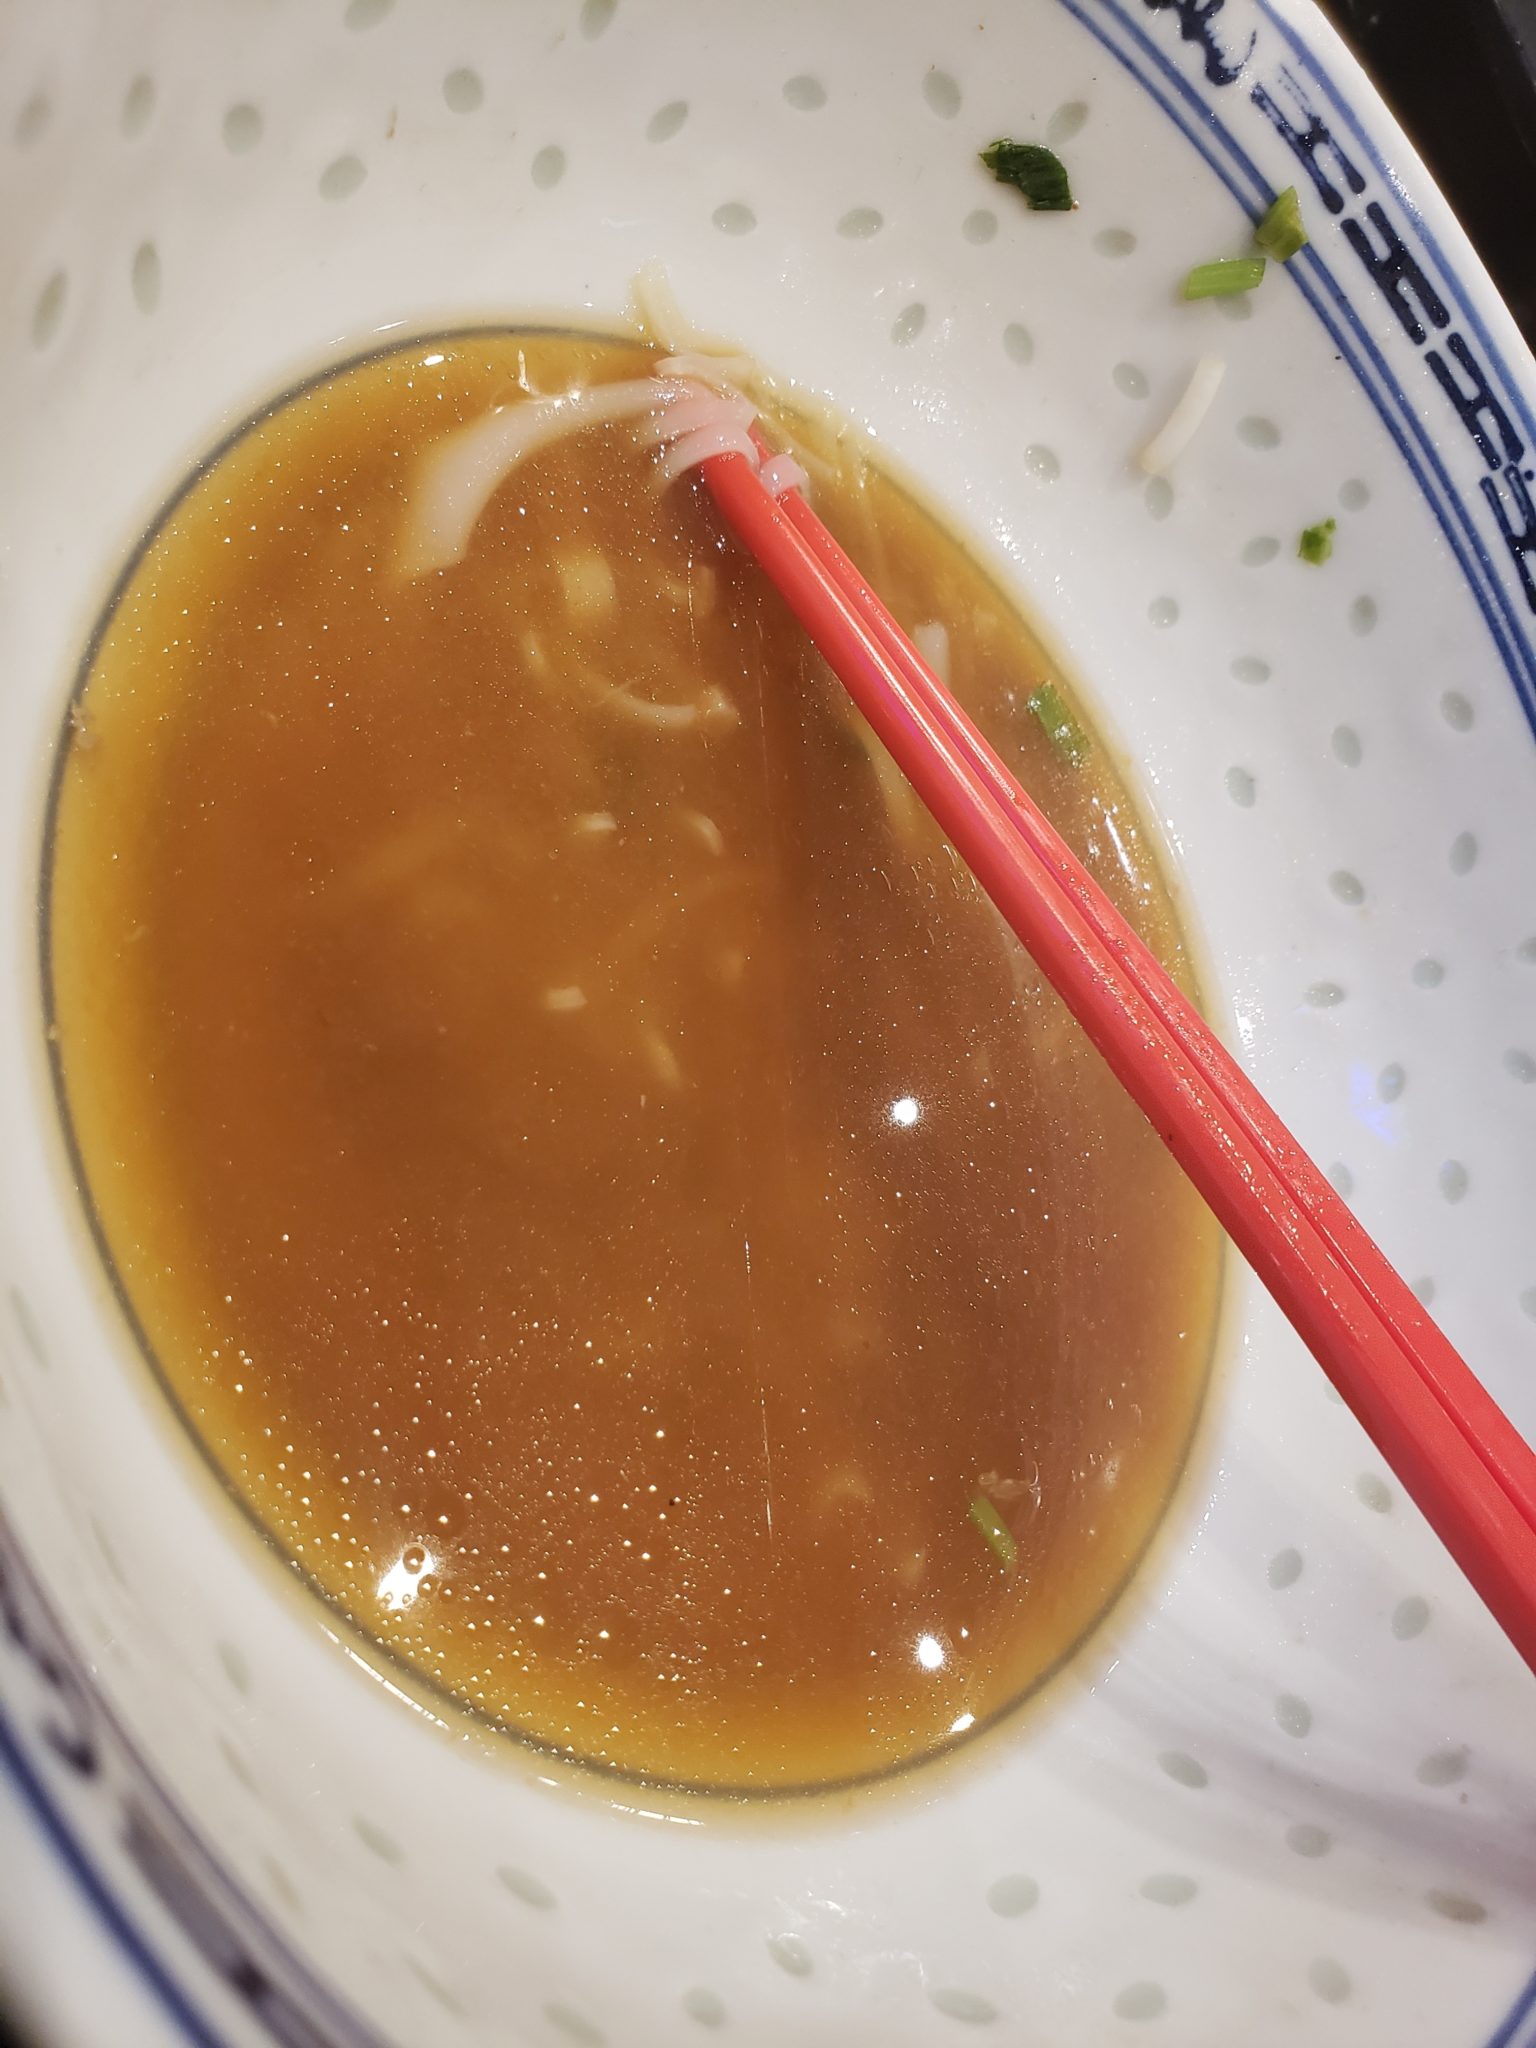 a bowl of soup with chopsticks